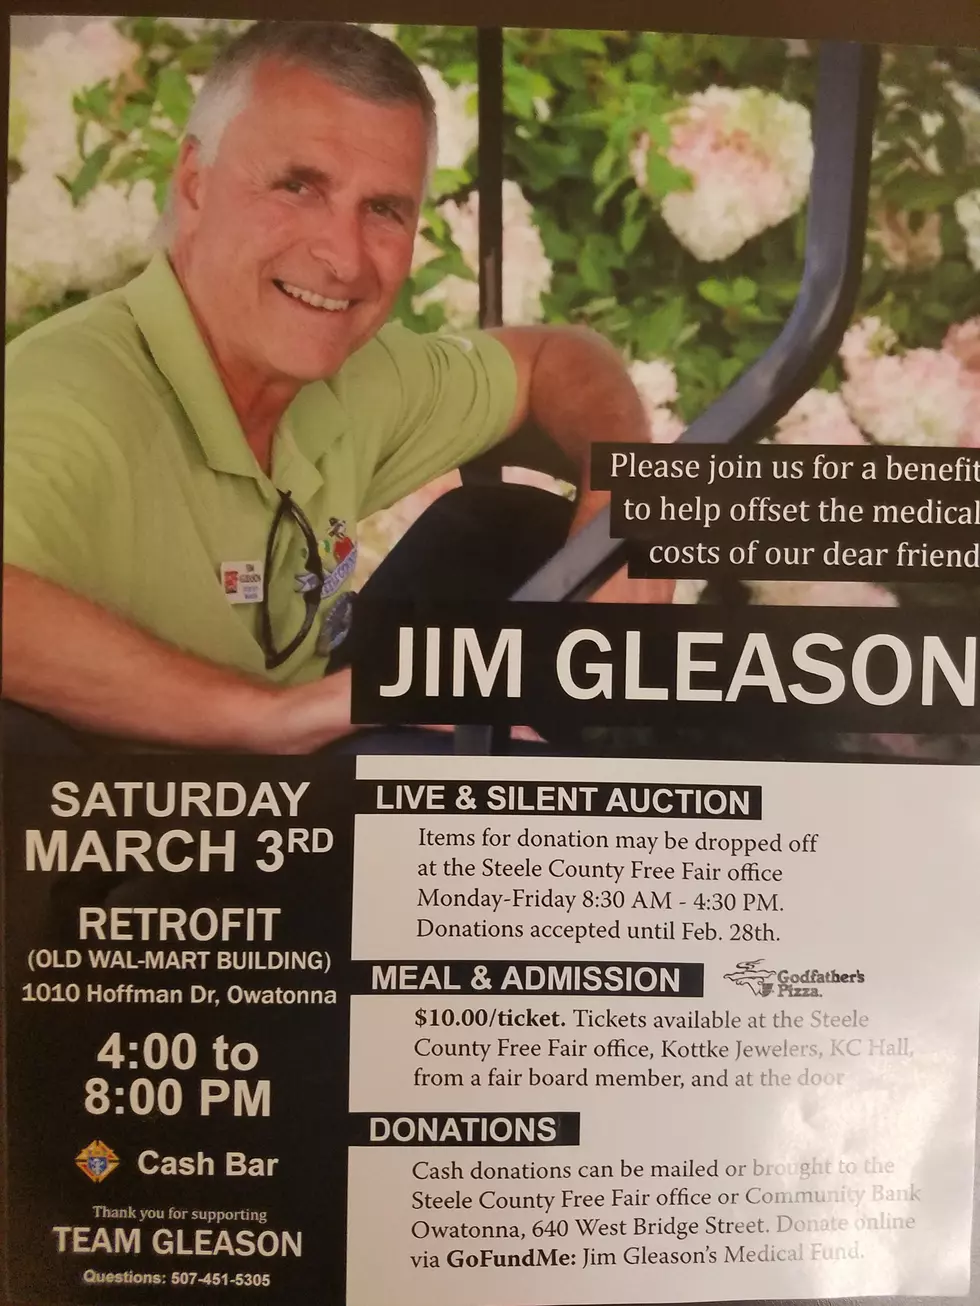 Jim Gleason Benefit